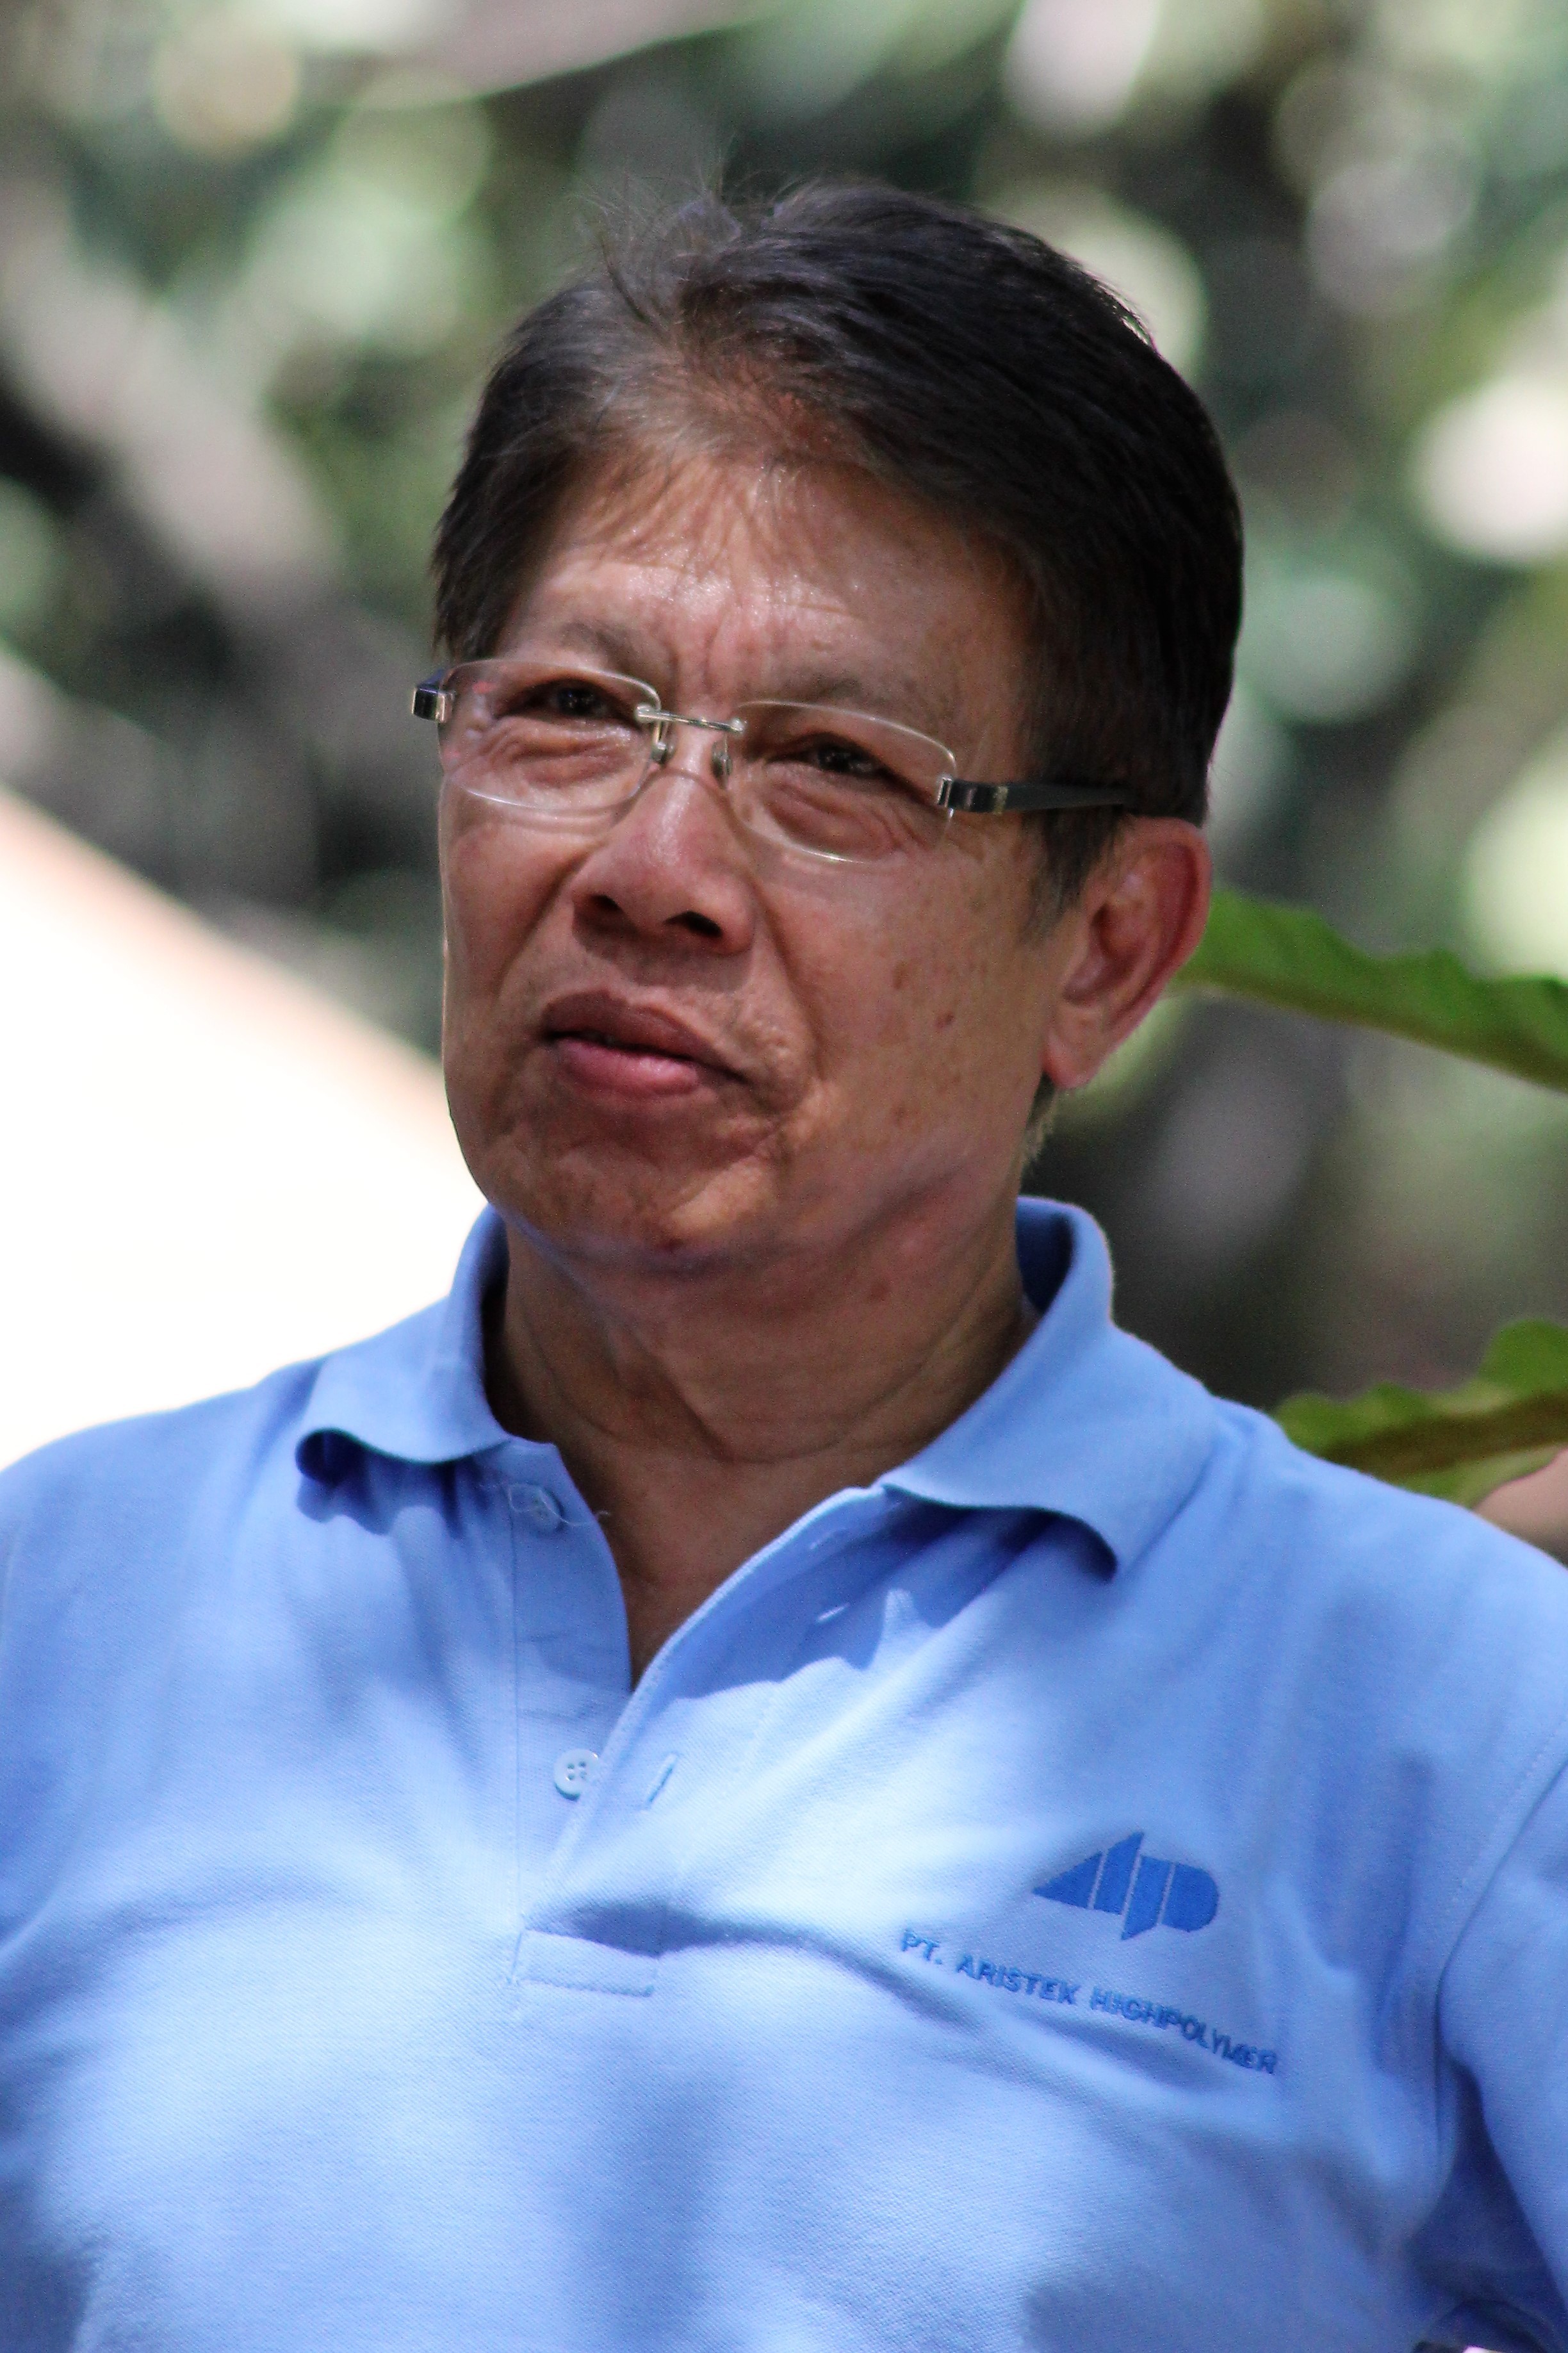 Aang Handimulya Setiamihardja, president and director